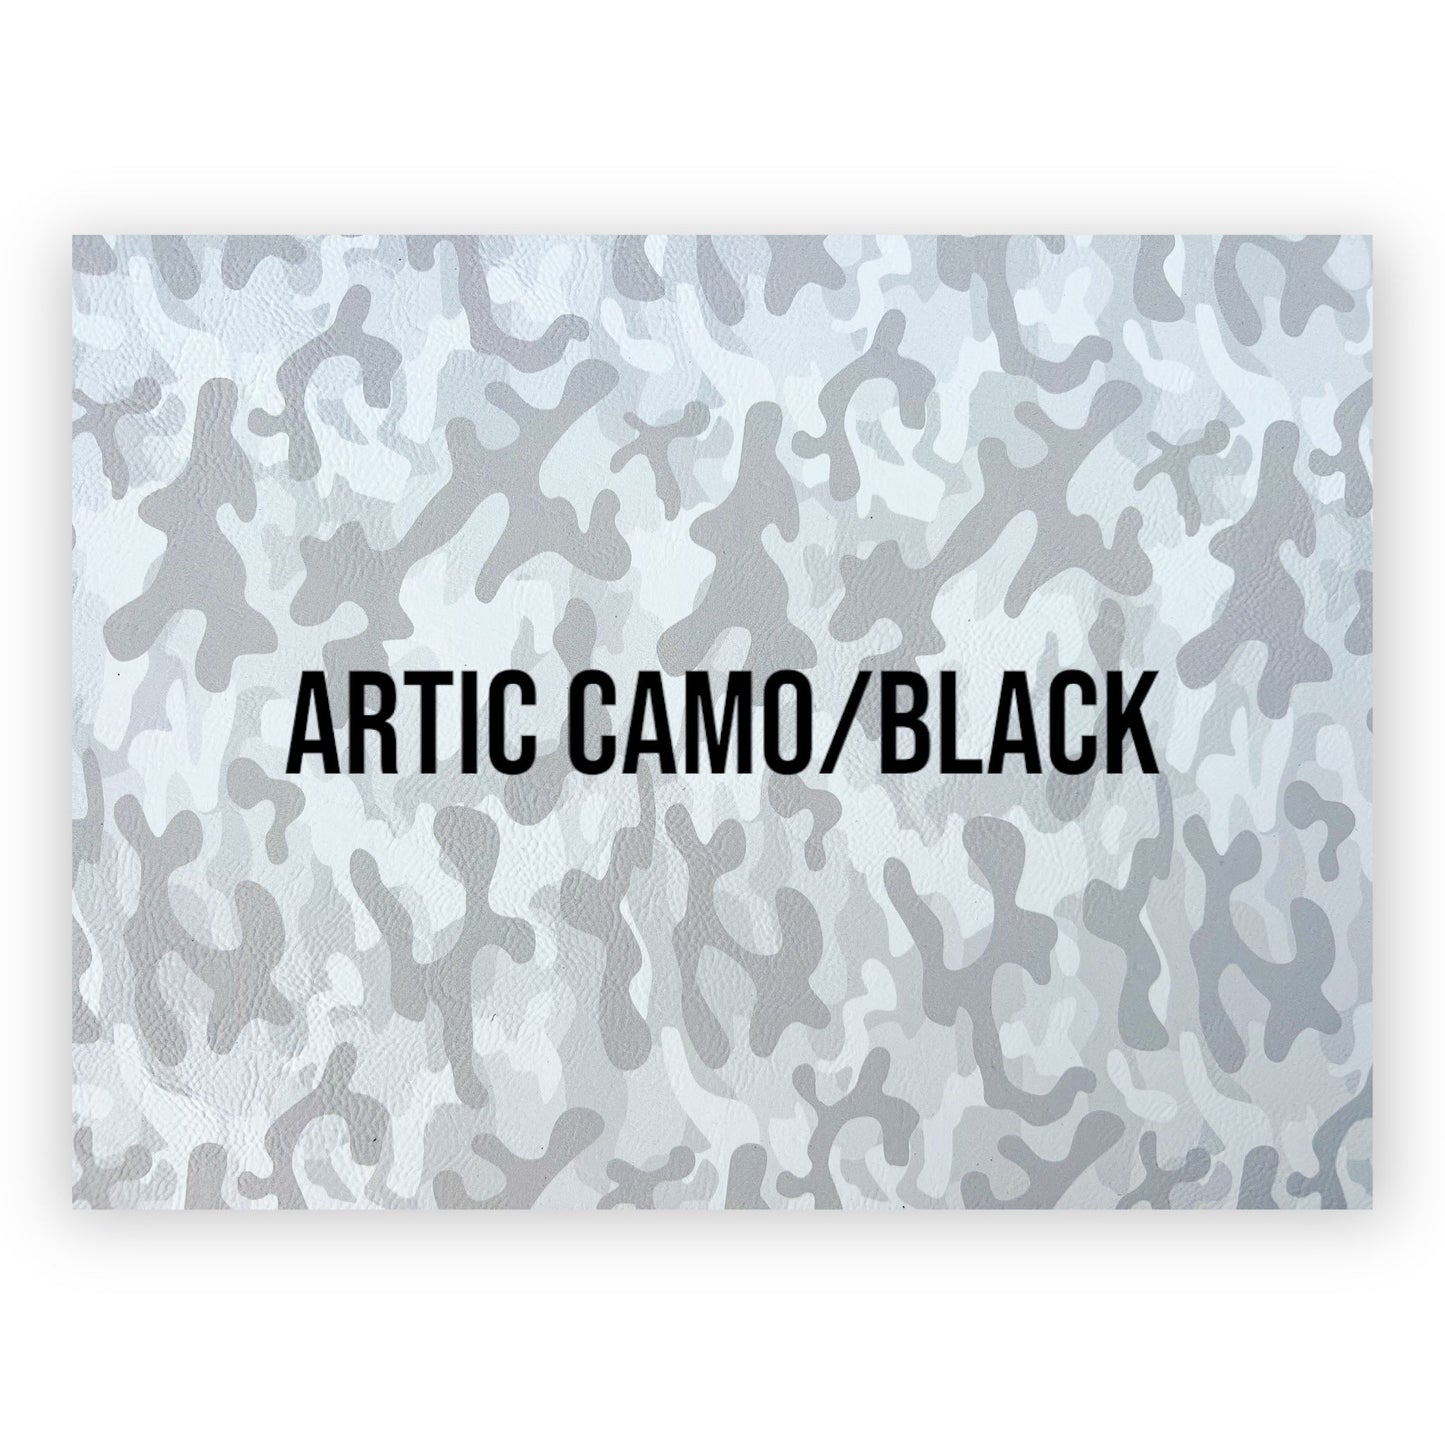 NO ADHESIVE ARTIC CAMO/BLACK LEATHERETTE SHEET (12"x24")